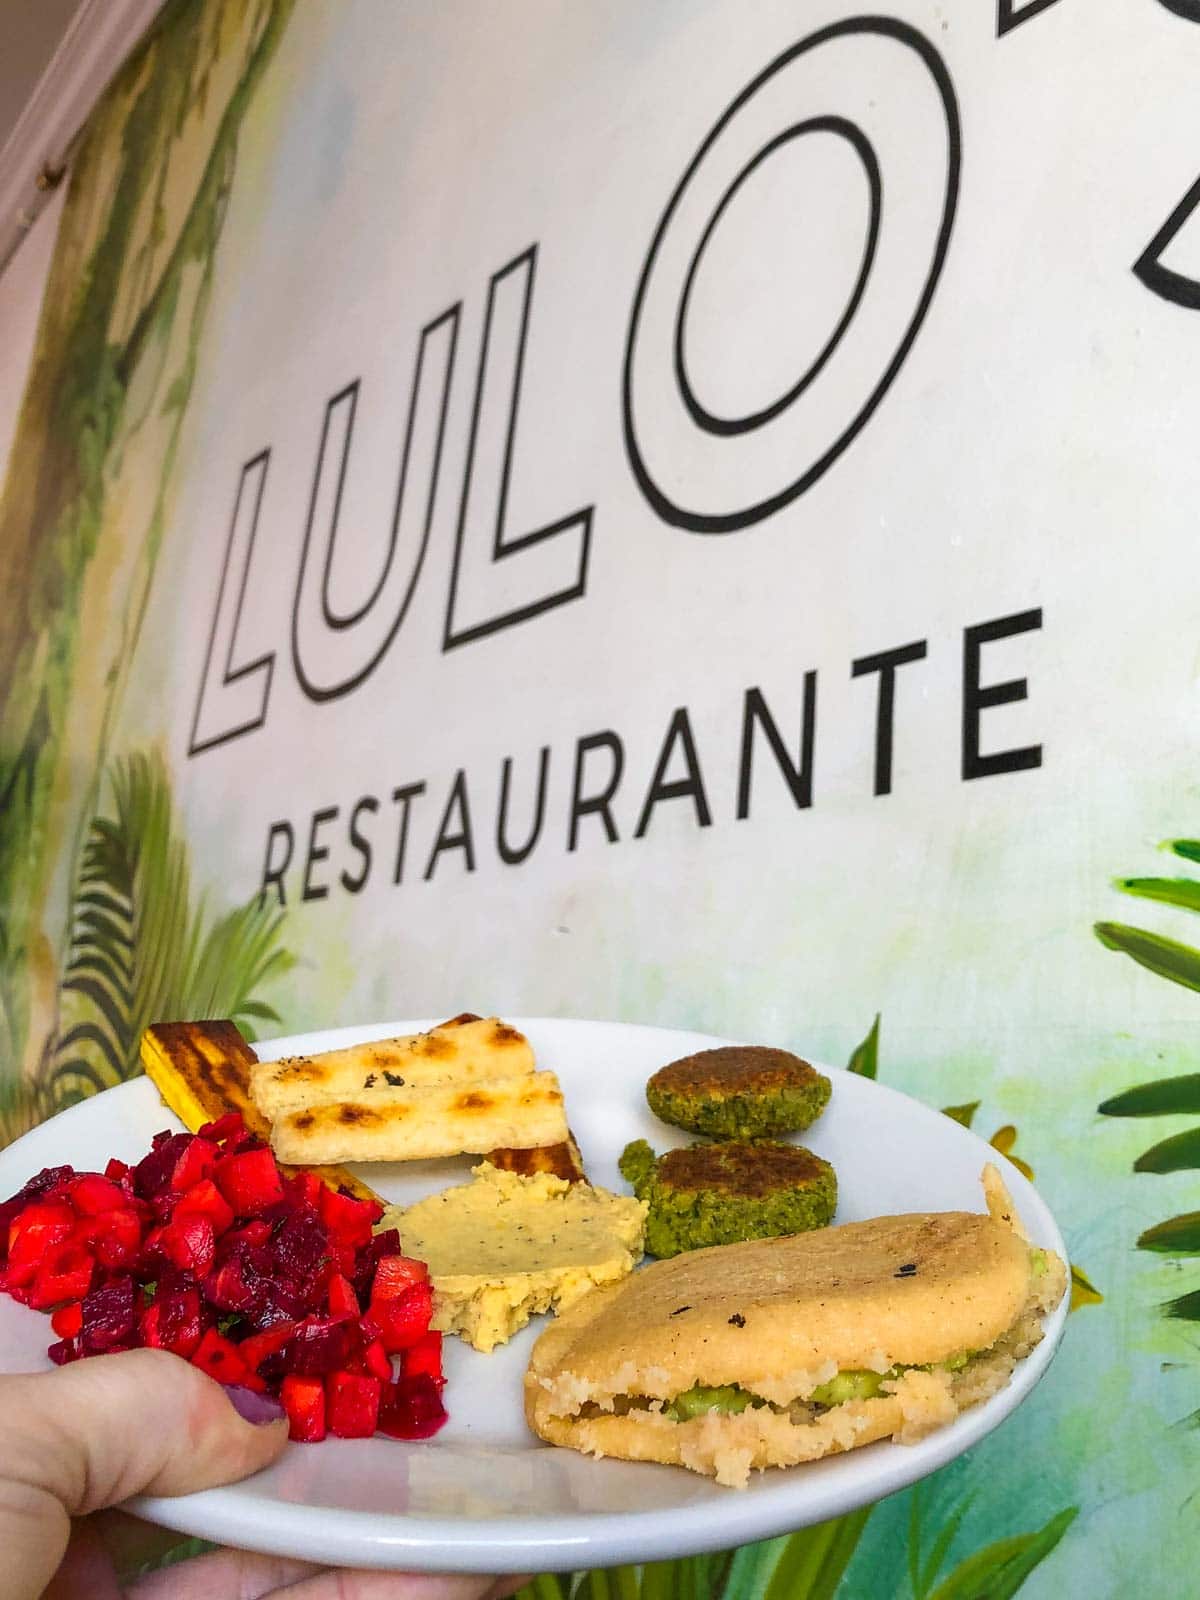 Lulo's Restaurant in Jardin, Colombia.